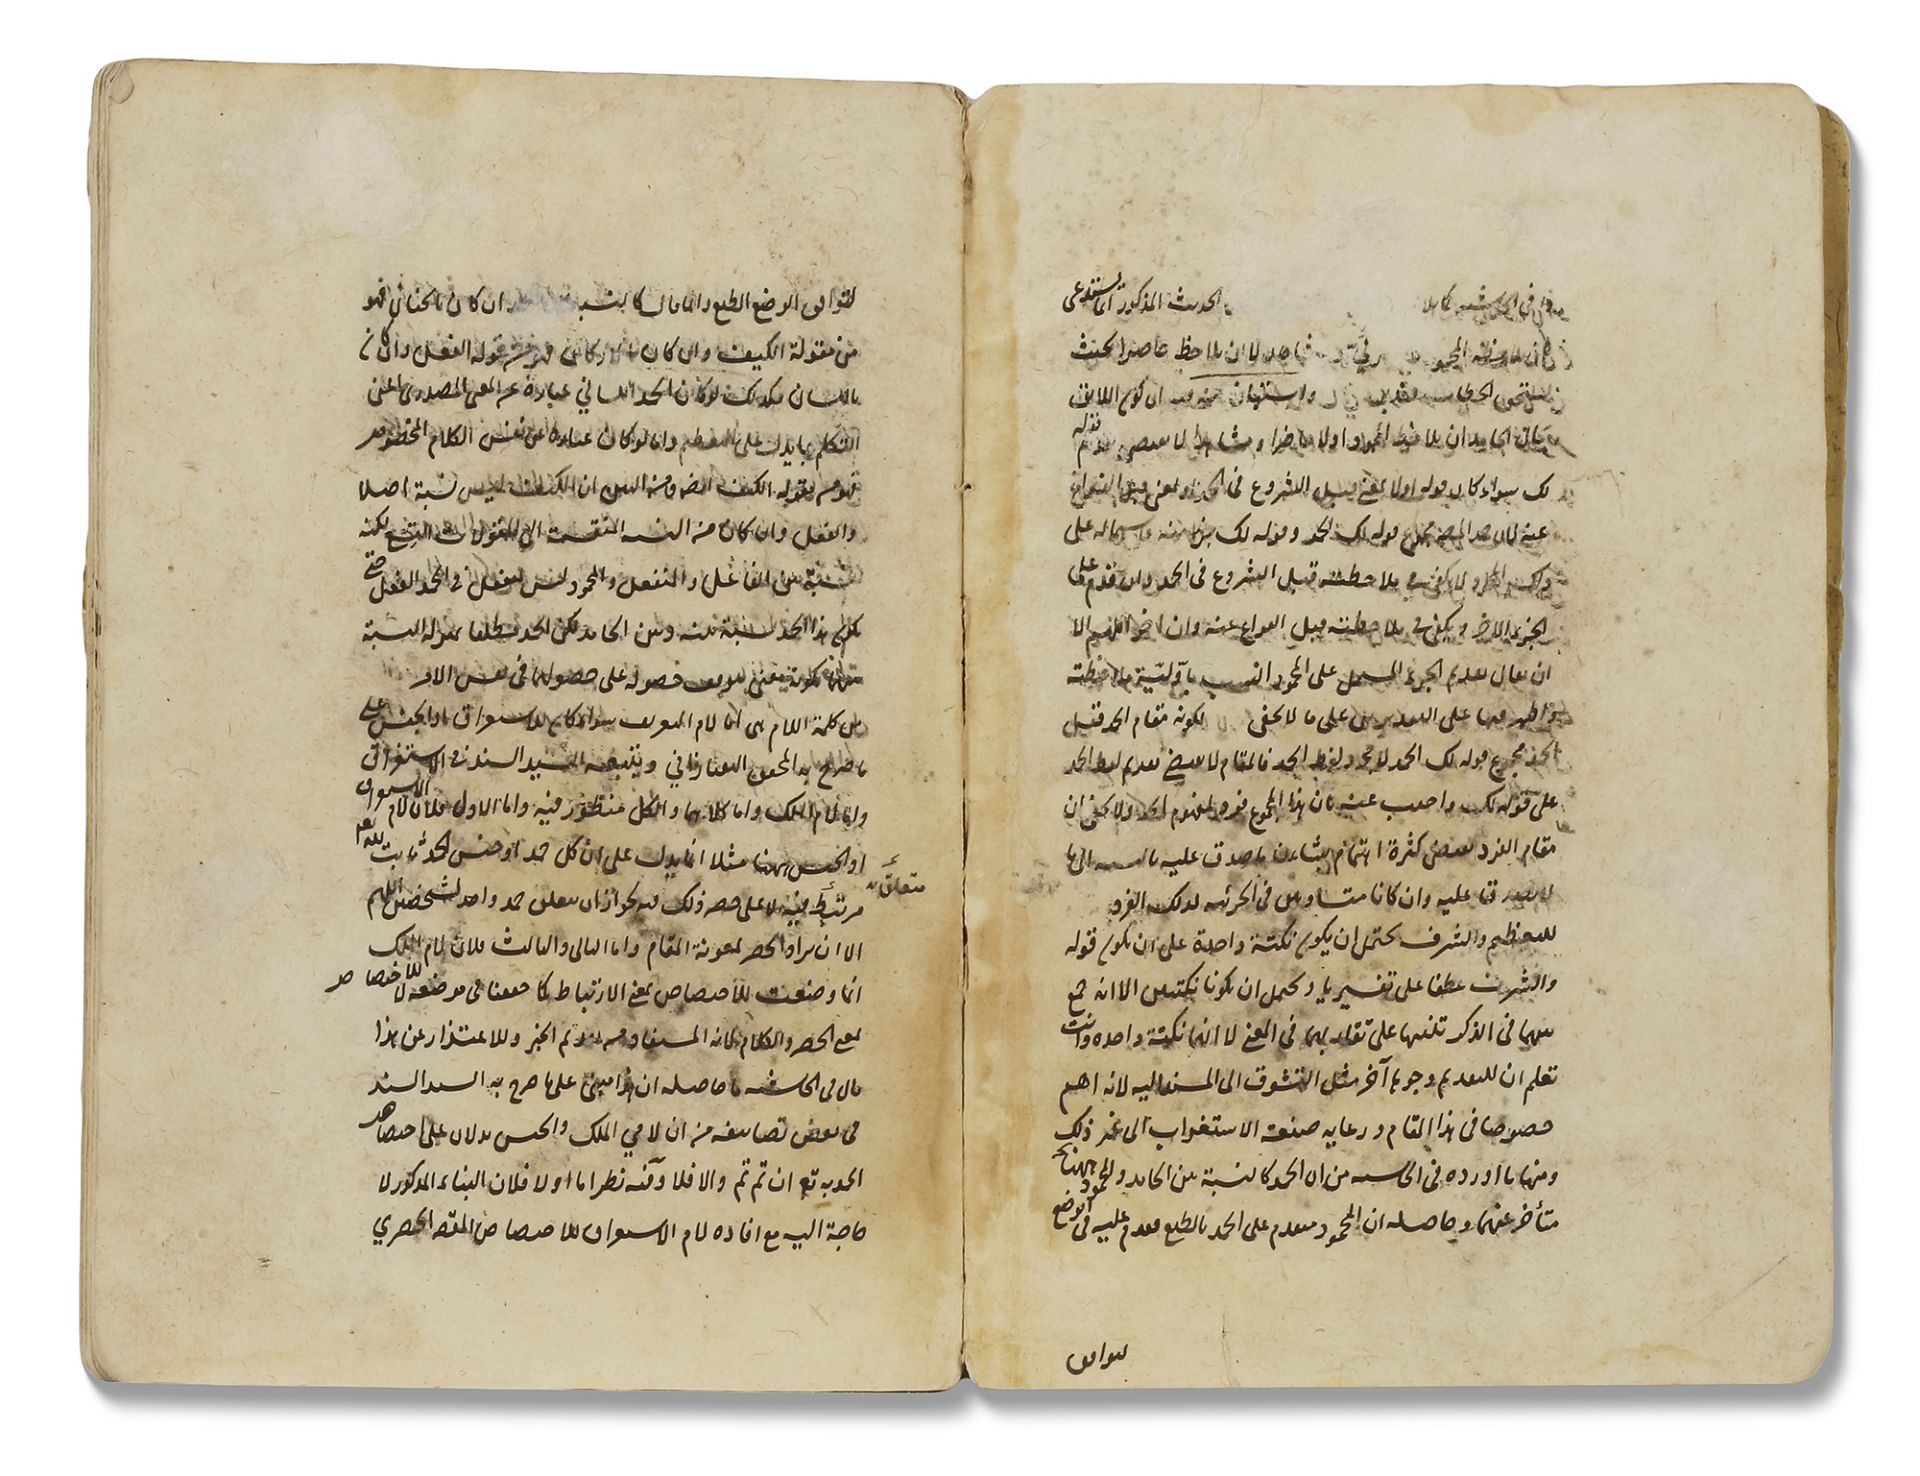 MIR ABUL FATAH IBN MIRZA MAKHDOOM AL-HUSAINI (D.974AH/ 1566AD), A TREATISE ON MATTERS CONCERNING THE